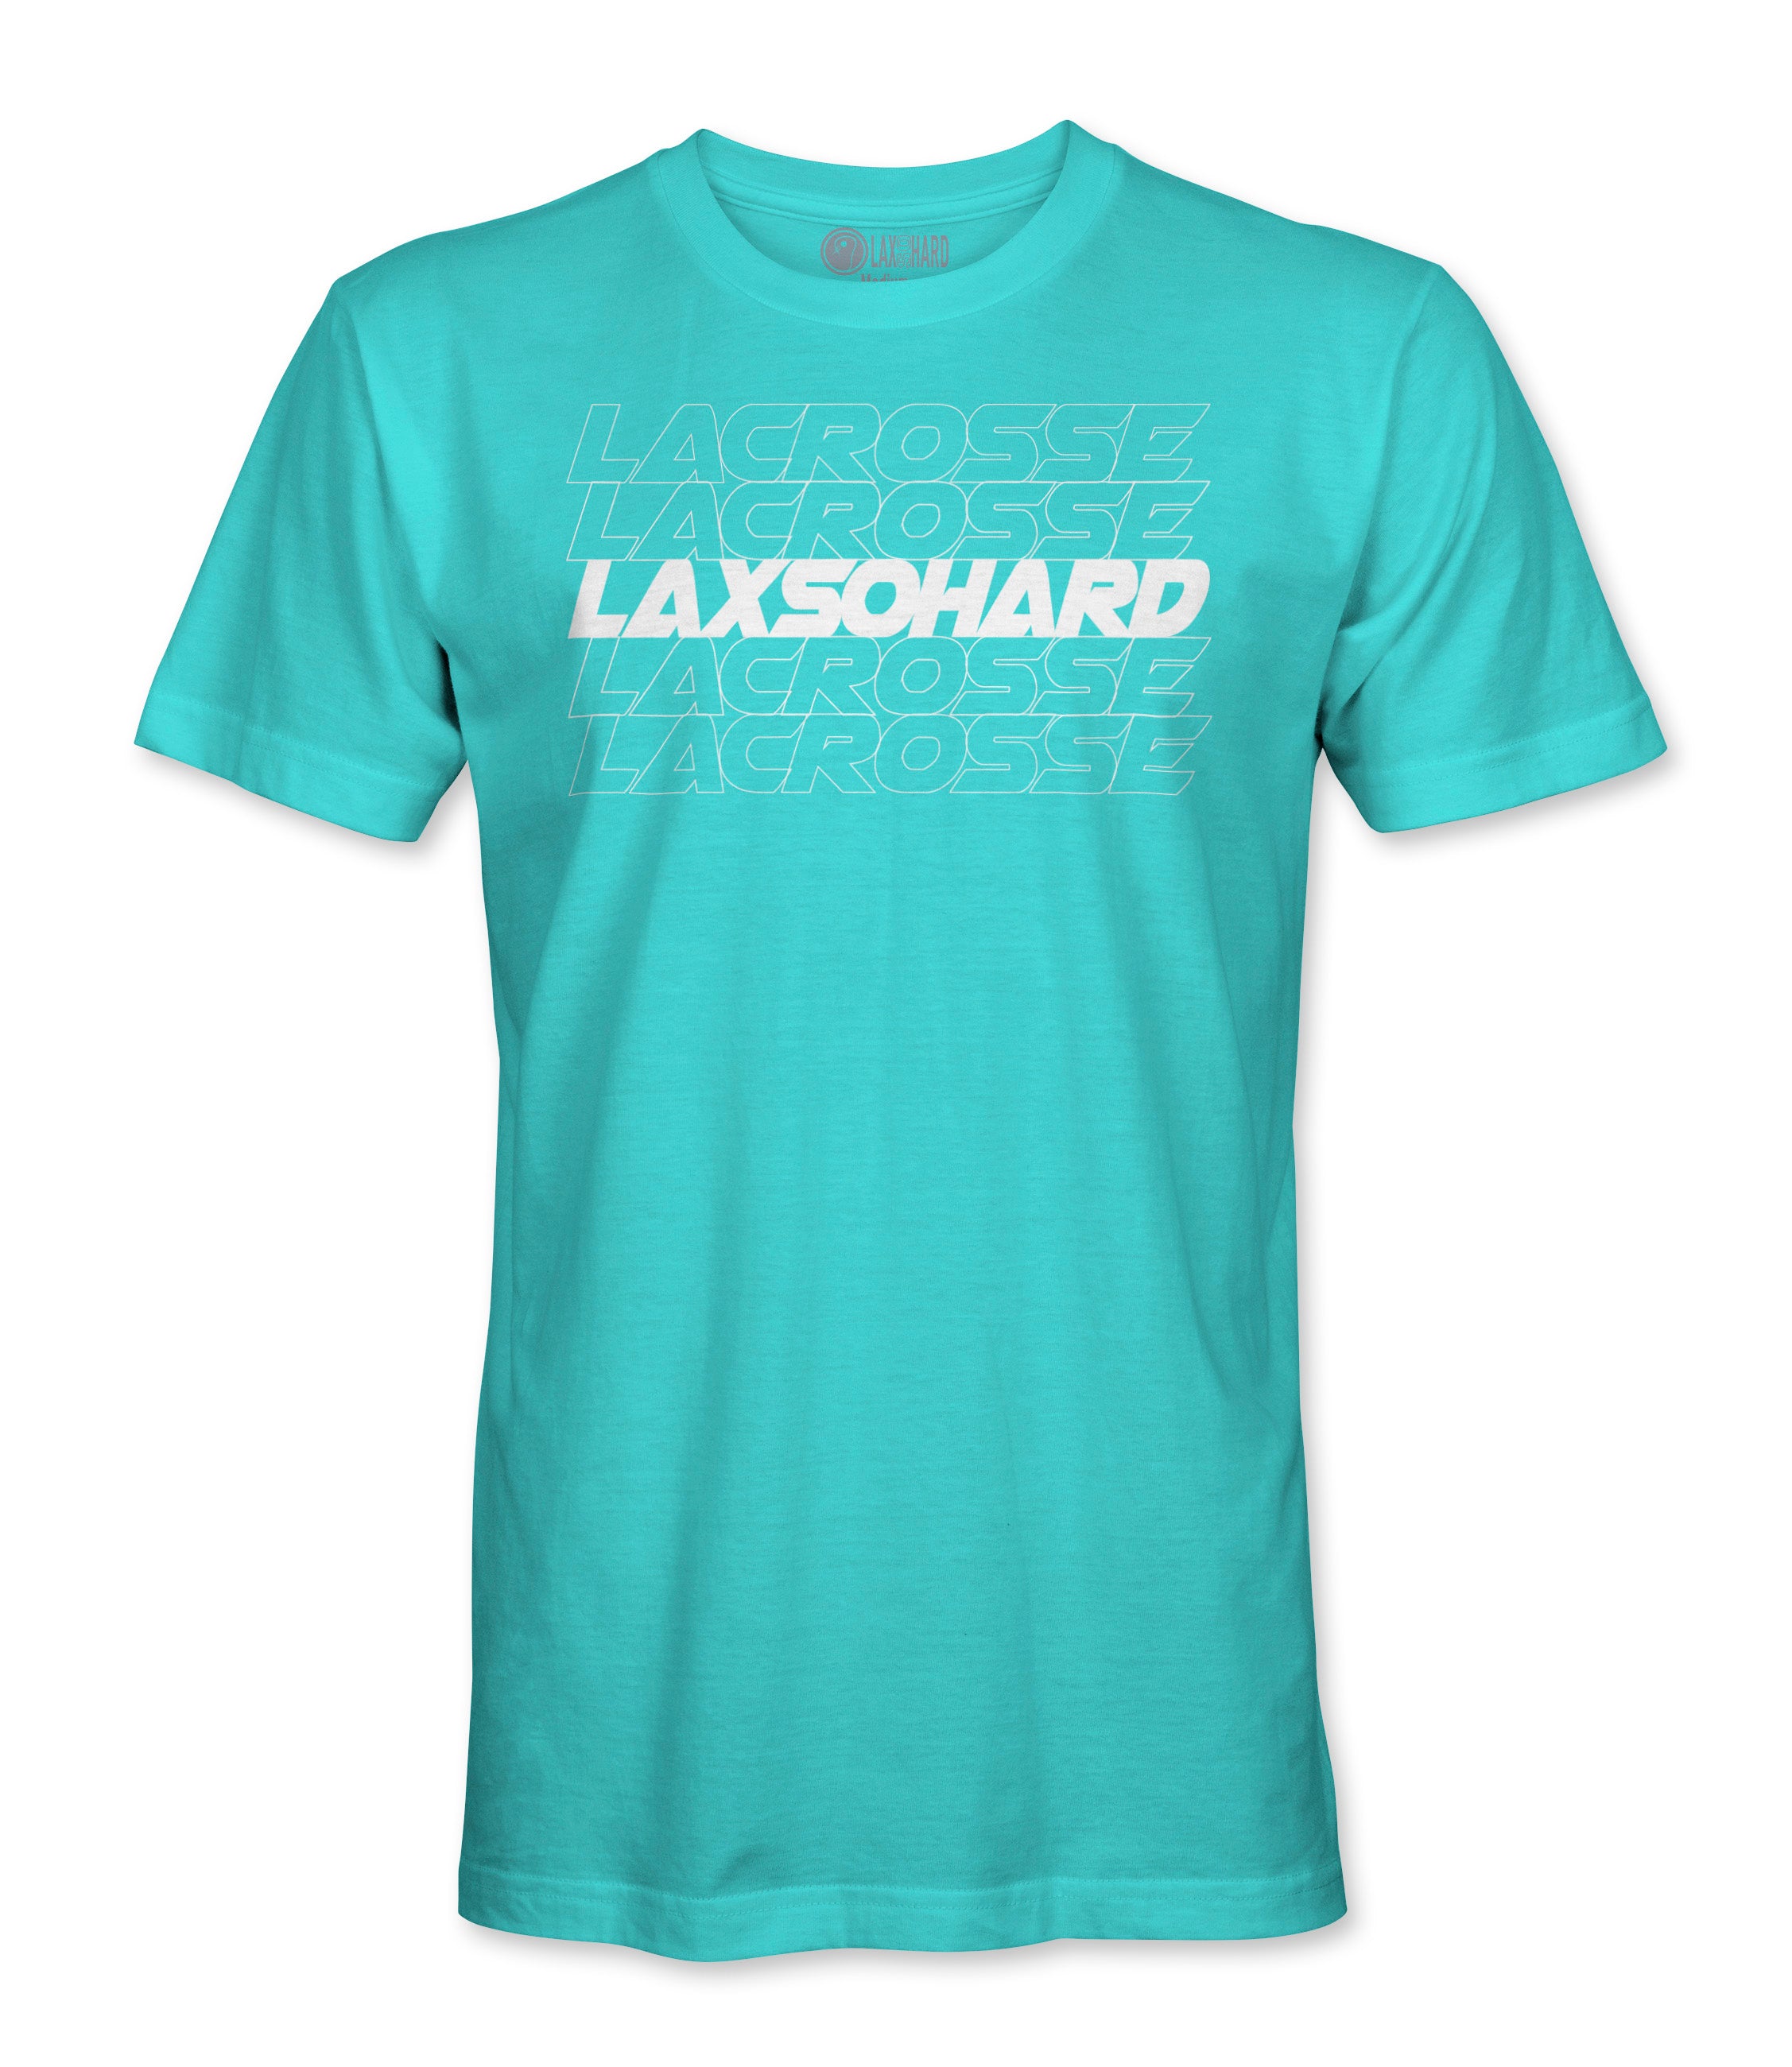 Boys LAX SO HARD Lacrosse T-Shirt - Blue